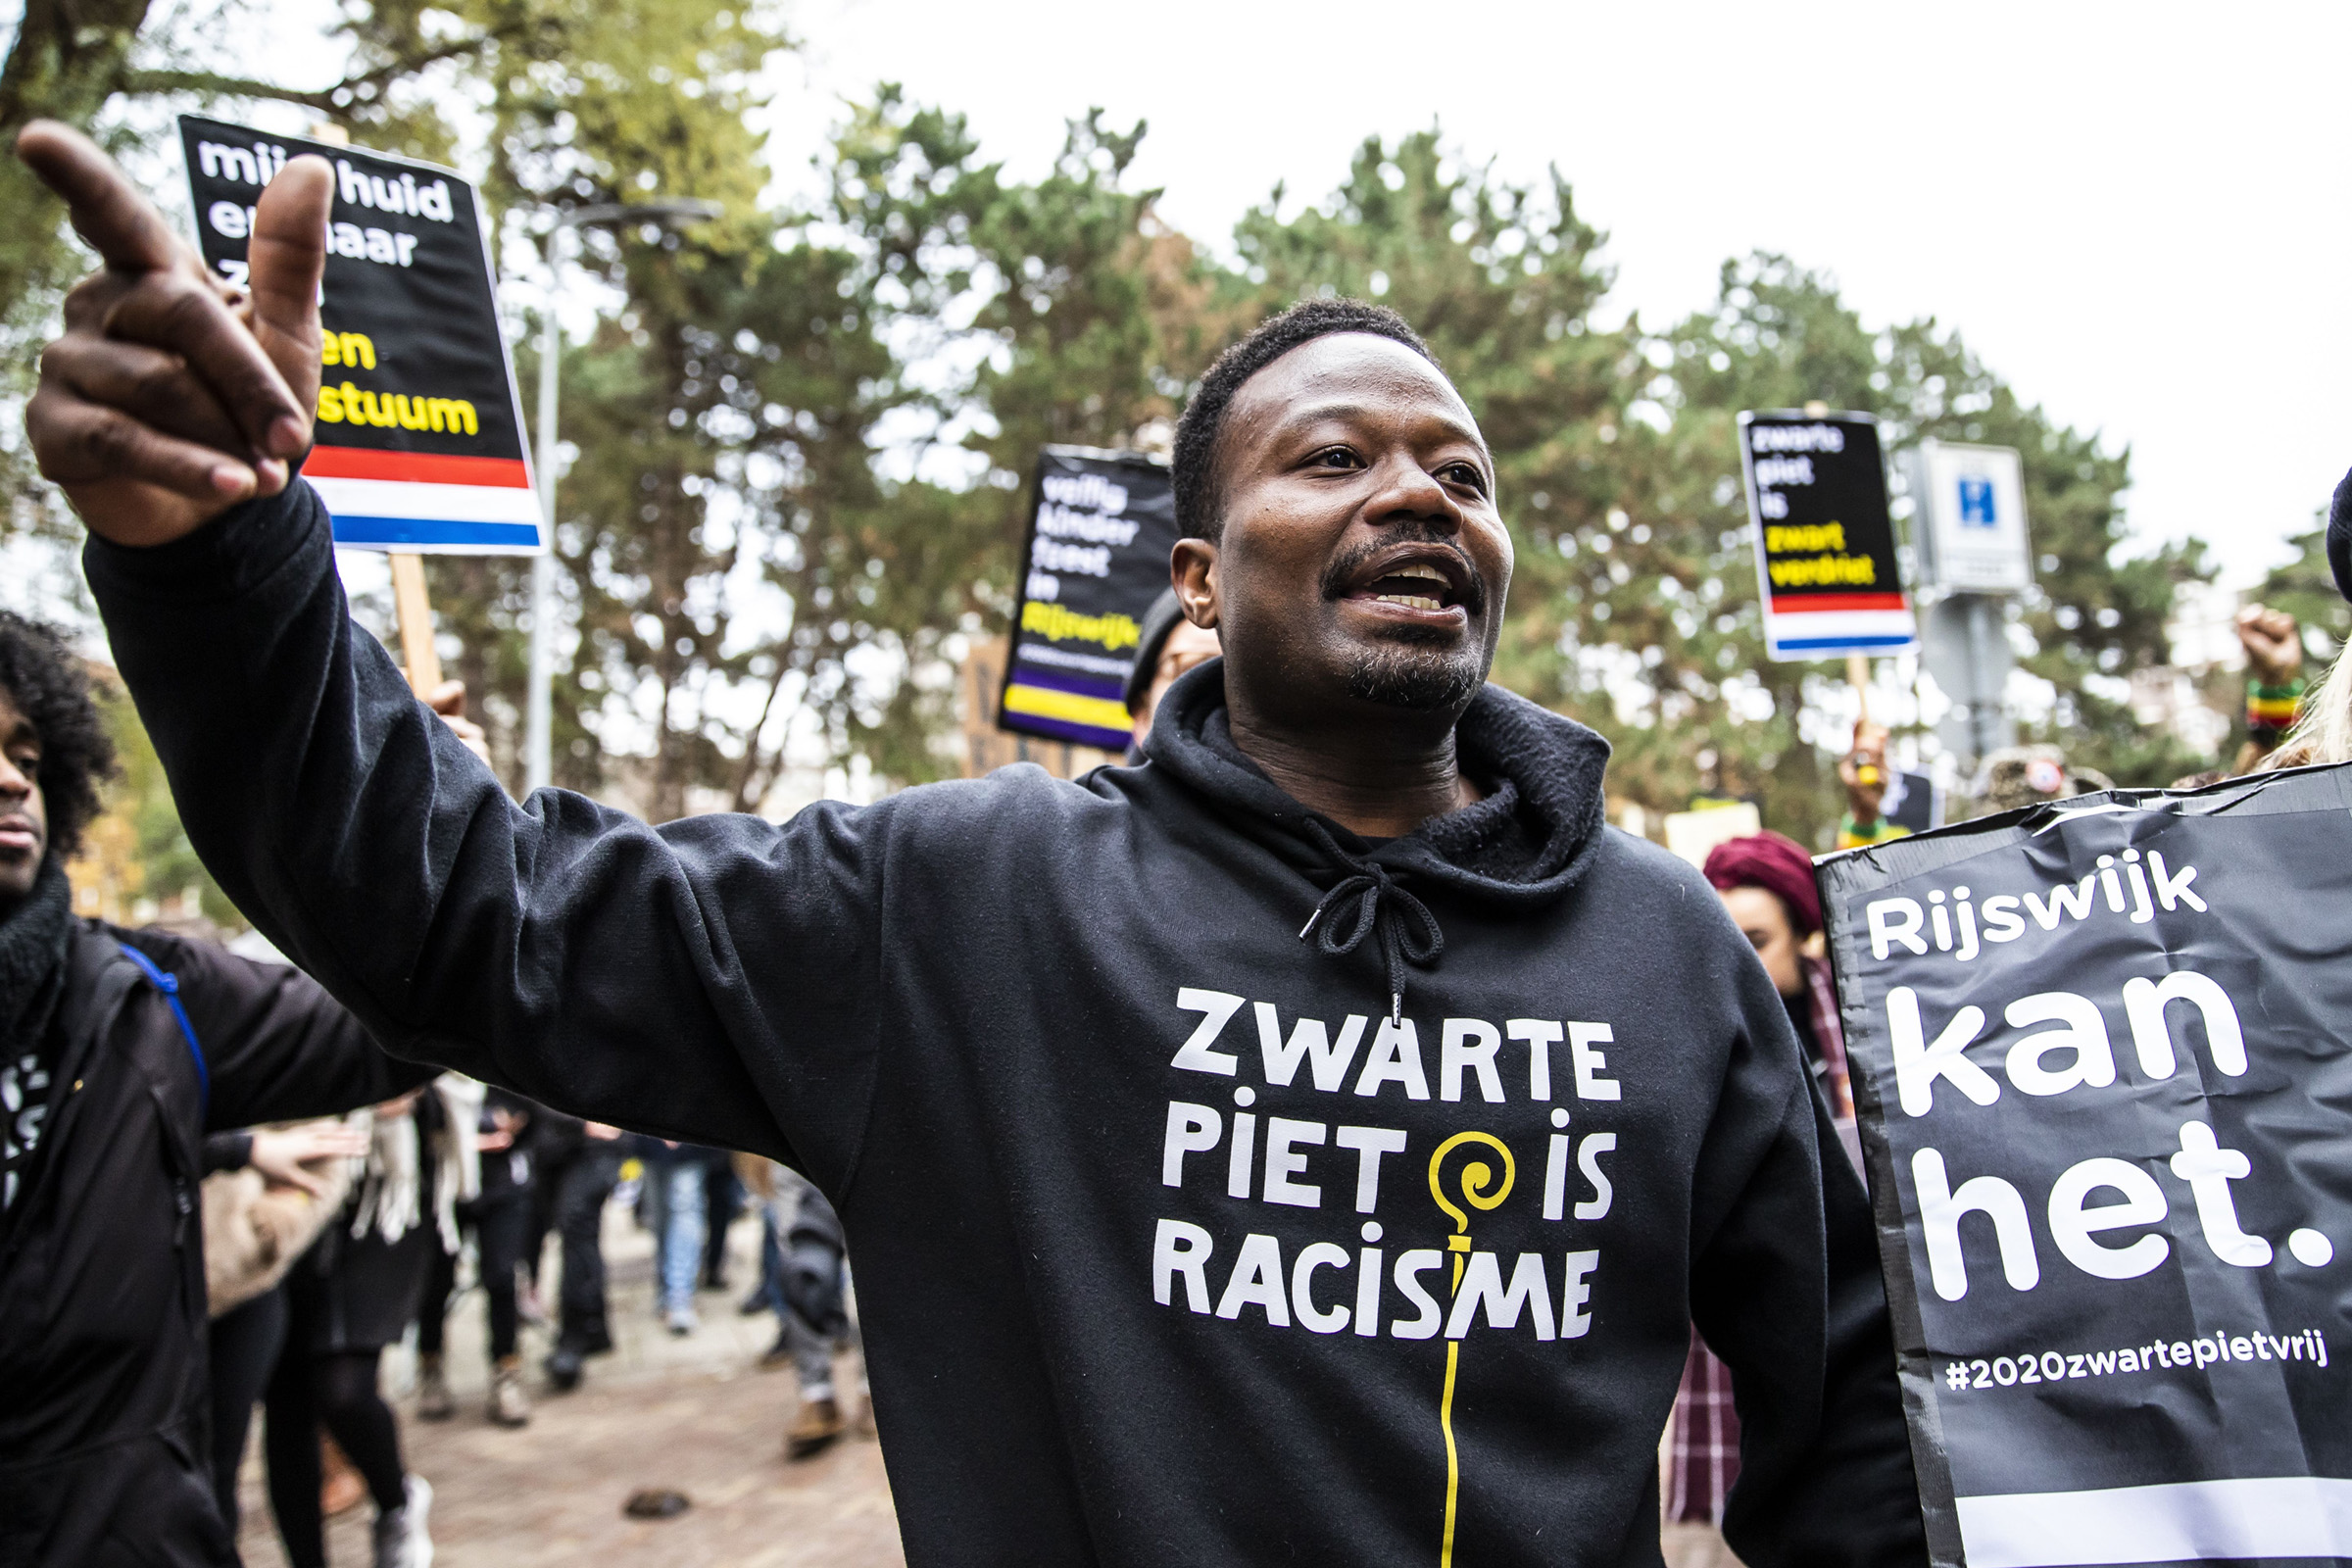 Dutch anti-discrimination activist Jerry Afriyie (C), leader of the 'Kick Out Zwarte Piet' (Kick Out Black Pete) movement, during a protest in Rijswijk, the Netherlands, on Nov. 23, 2019. (Lauren van Putten—Hollandse Hoogte/Redux)